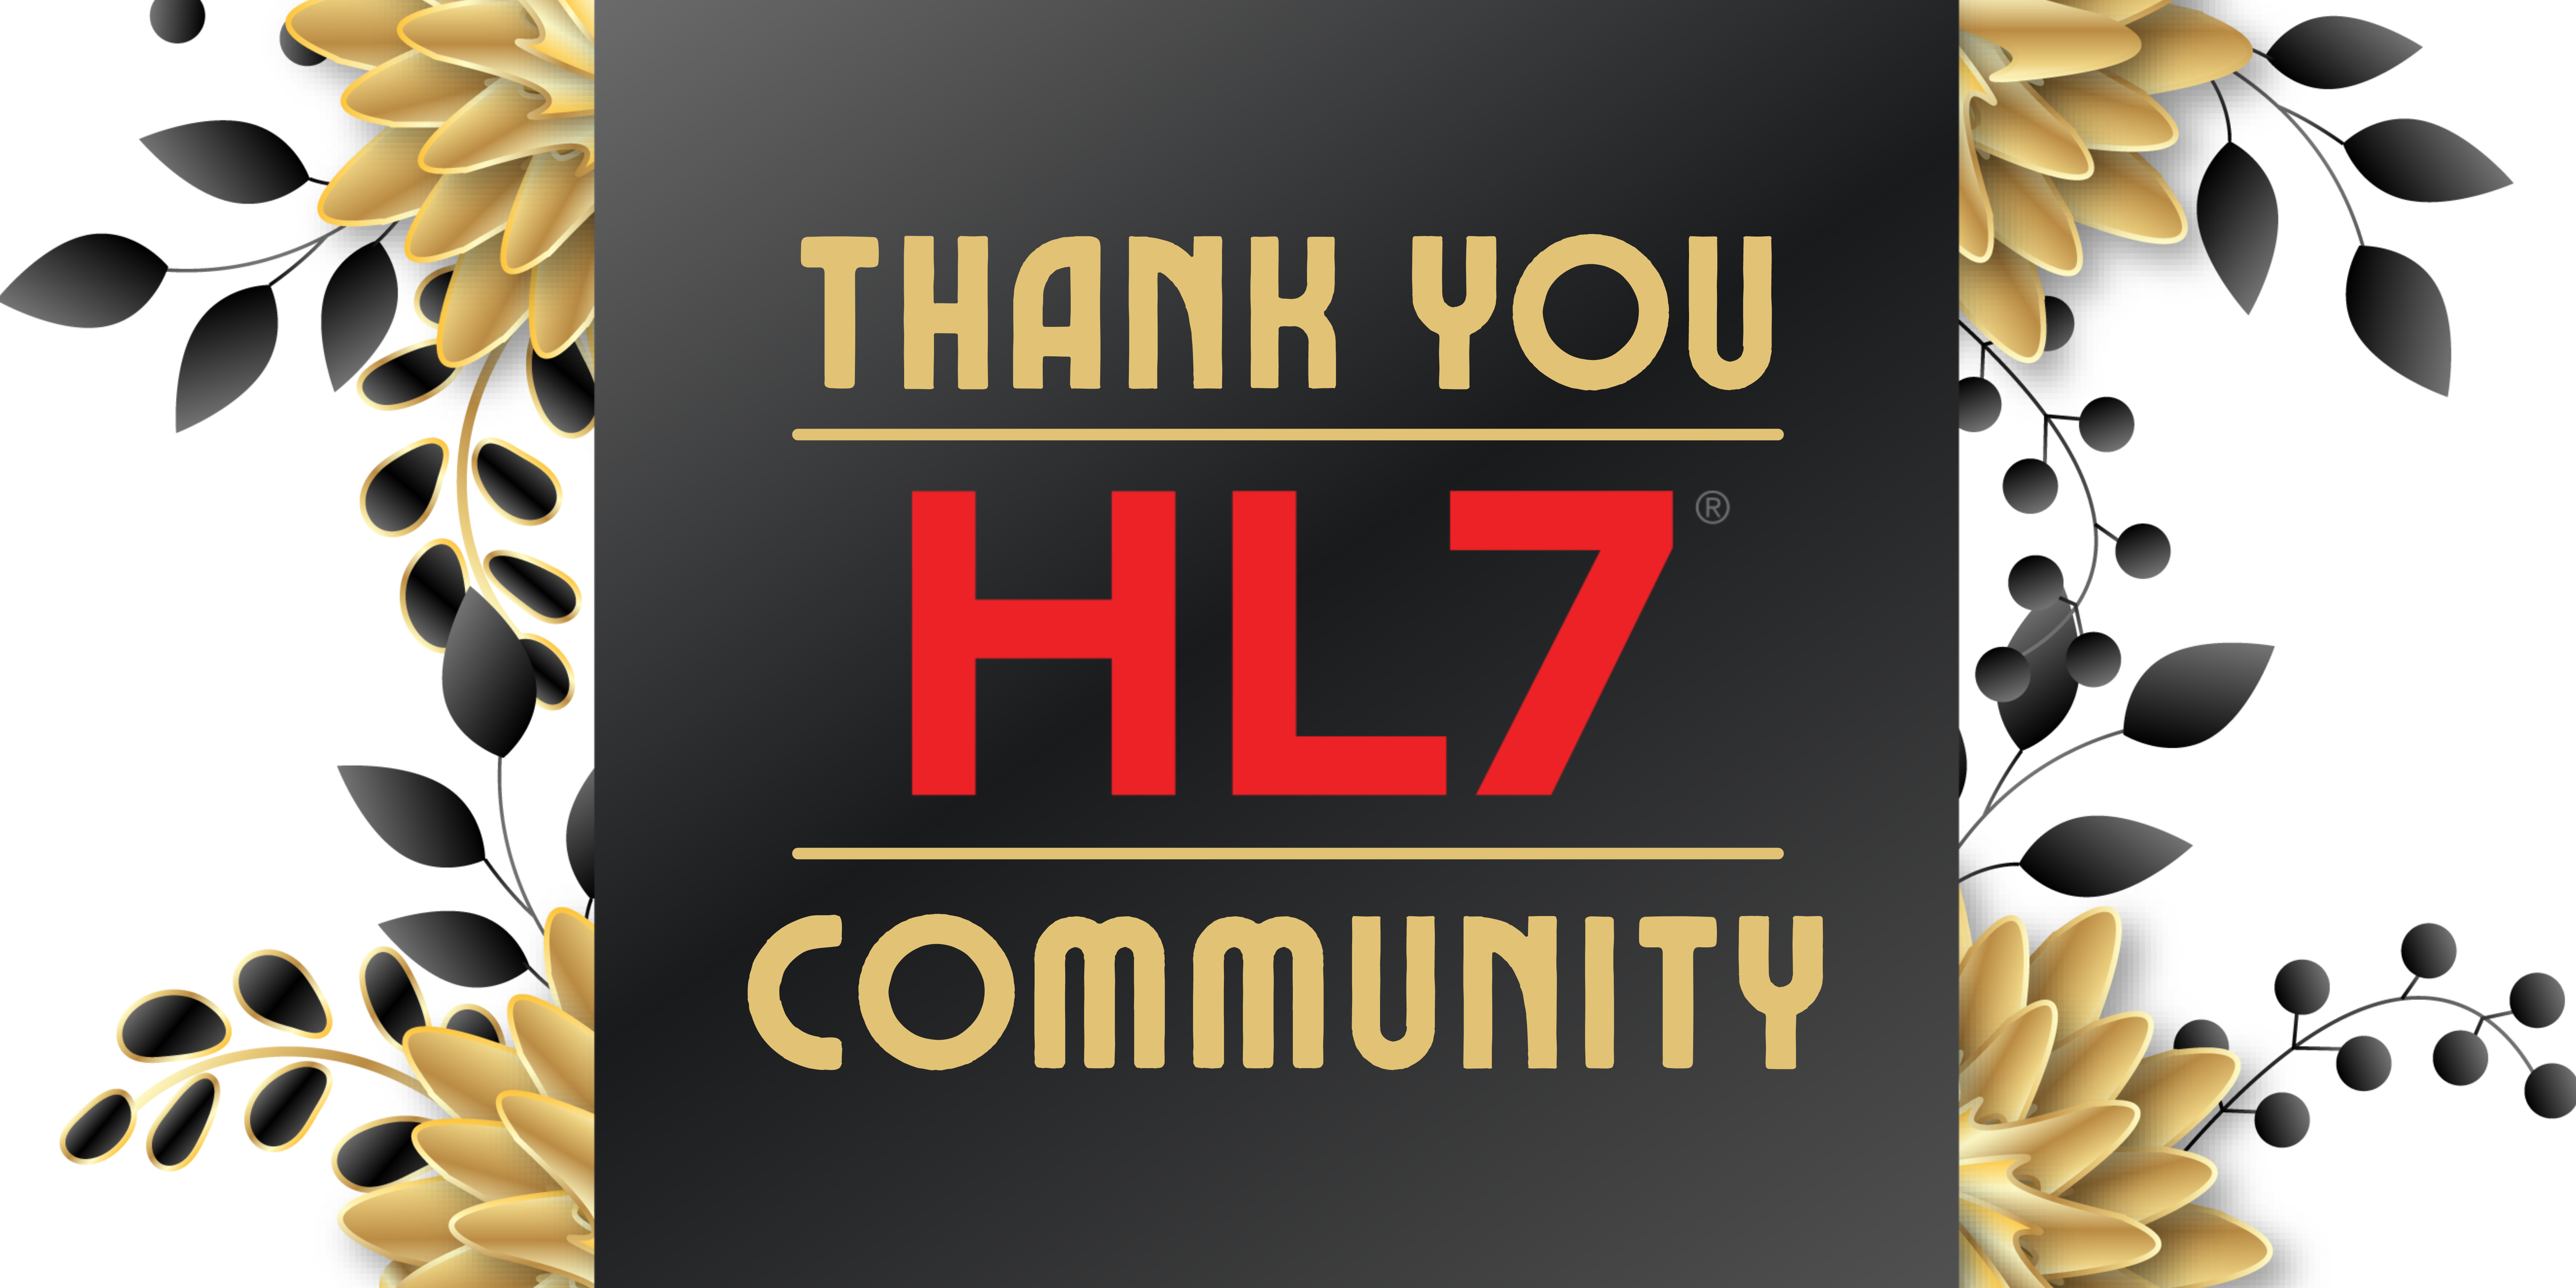 Thank you HL7 Community